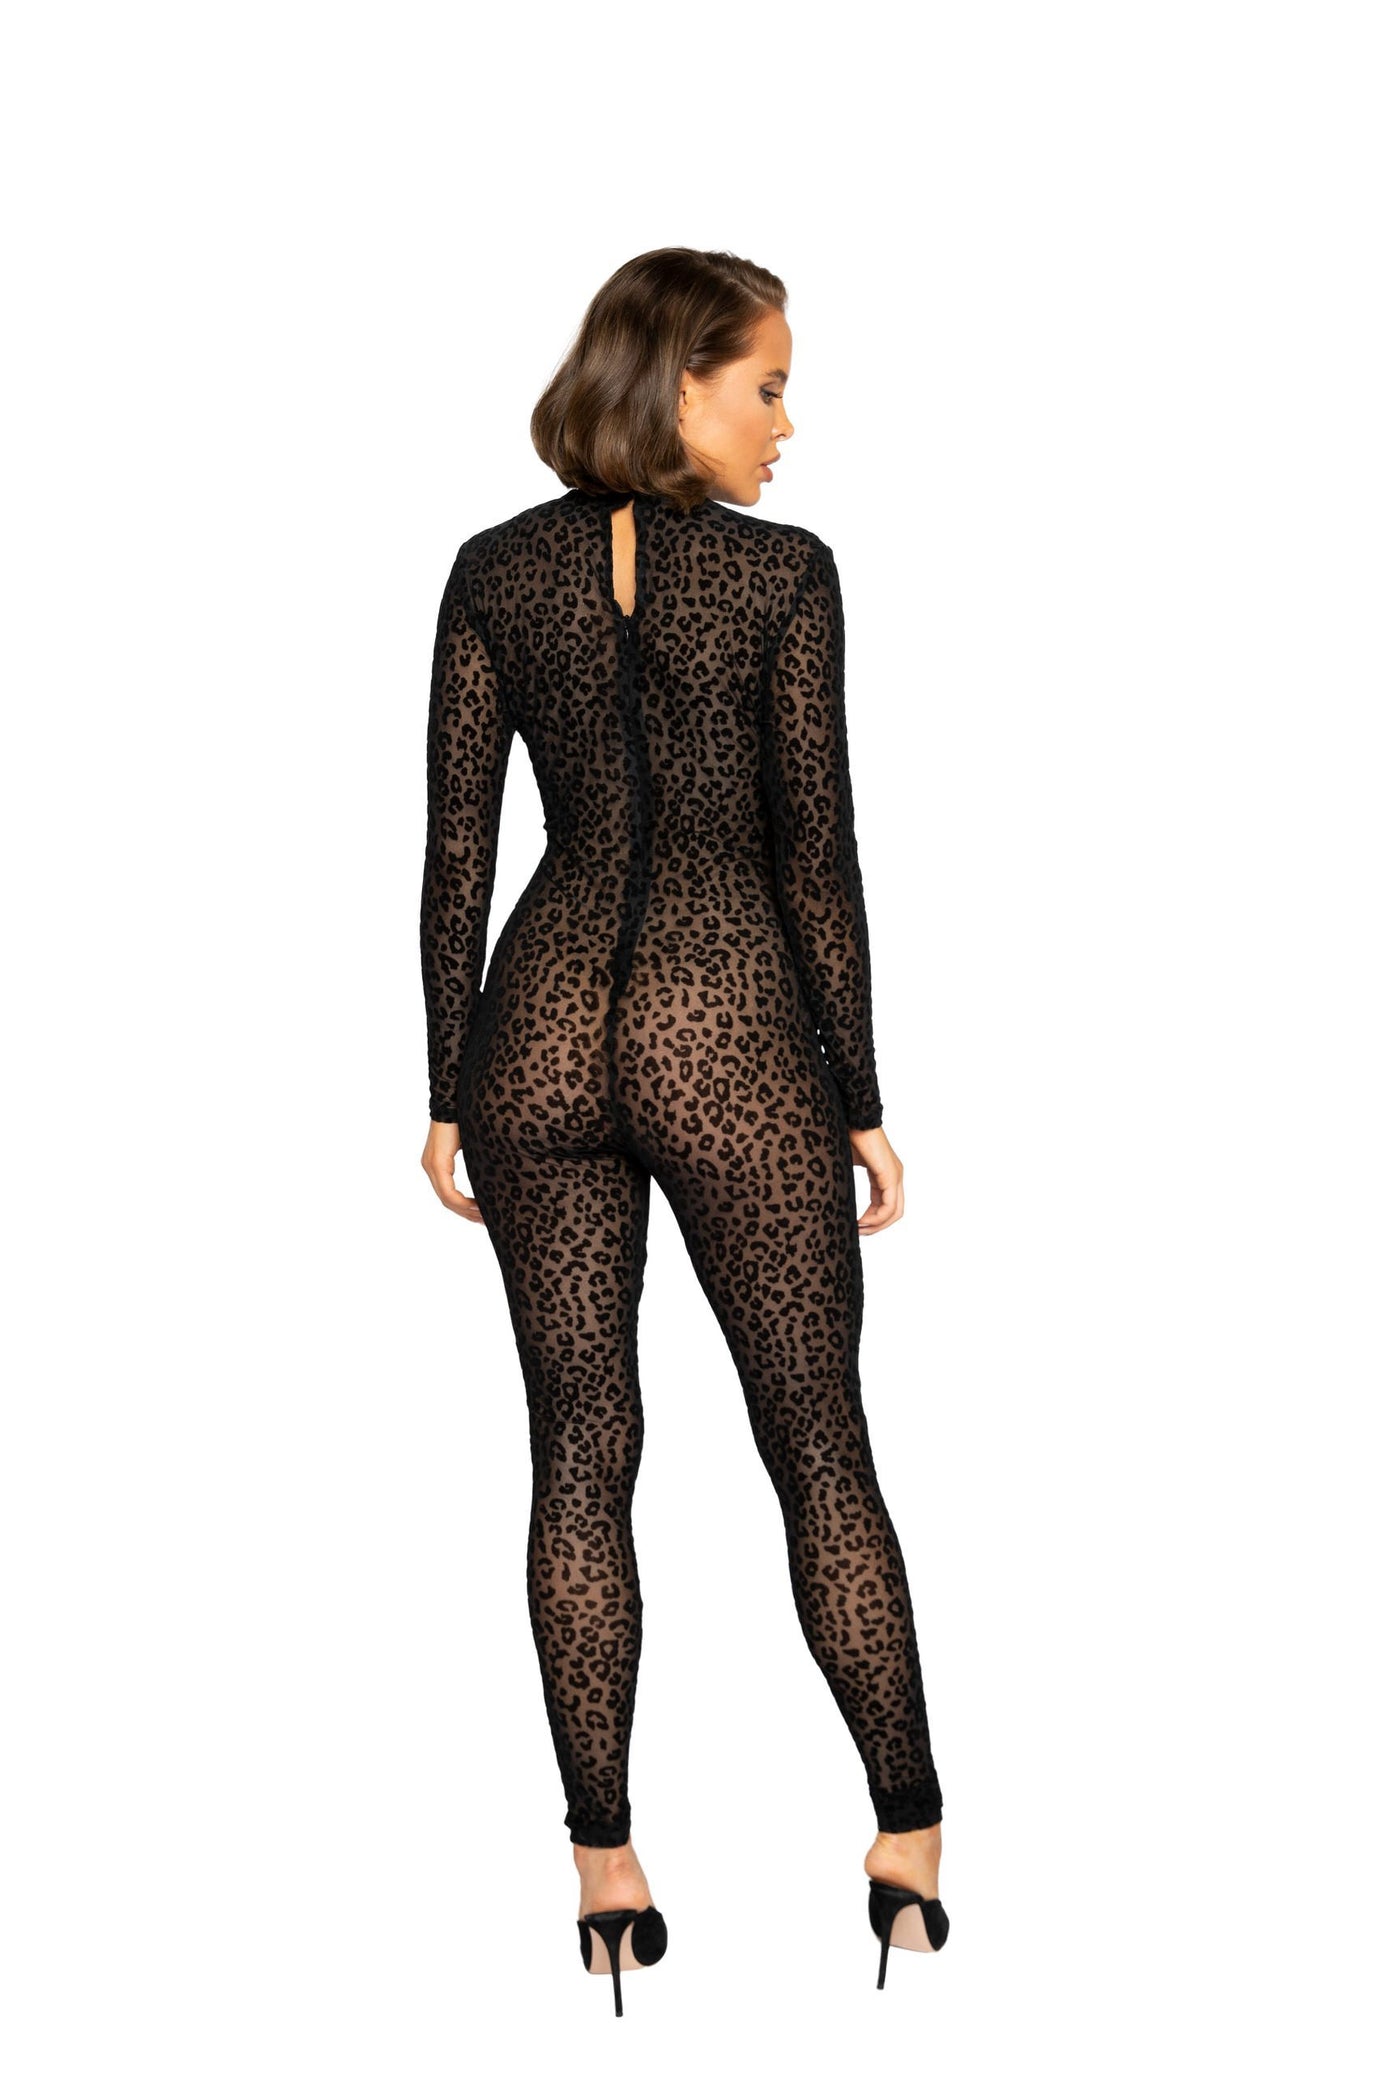 Buy Velvet Leopard Bodysuit from RomaRetailShop for 50.00 with Same Day Shipping Designed by Roma LI376-Blk-S